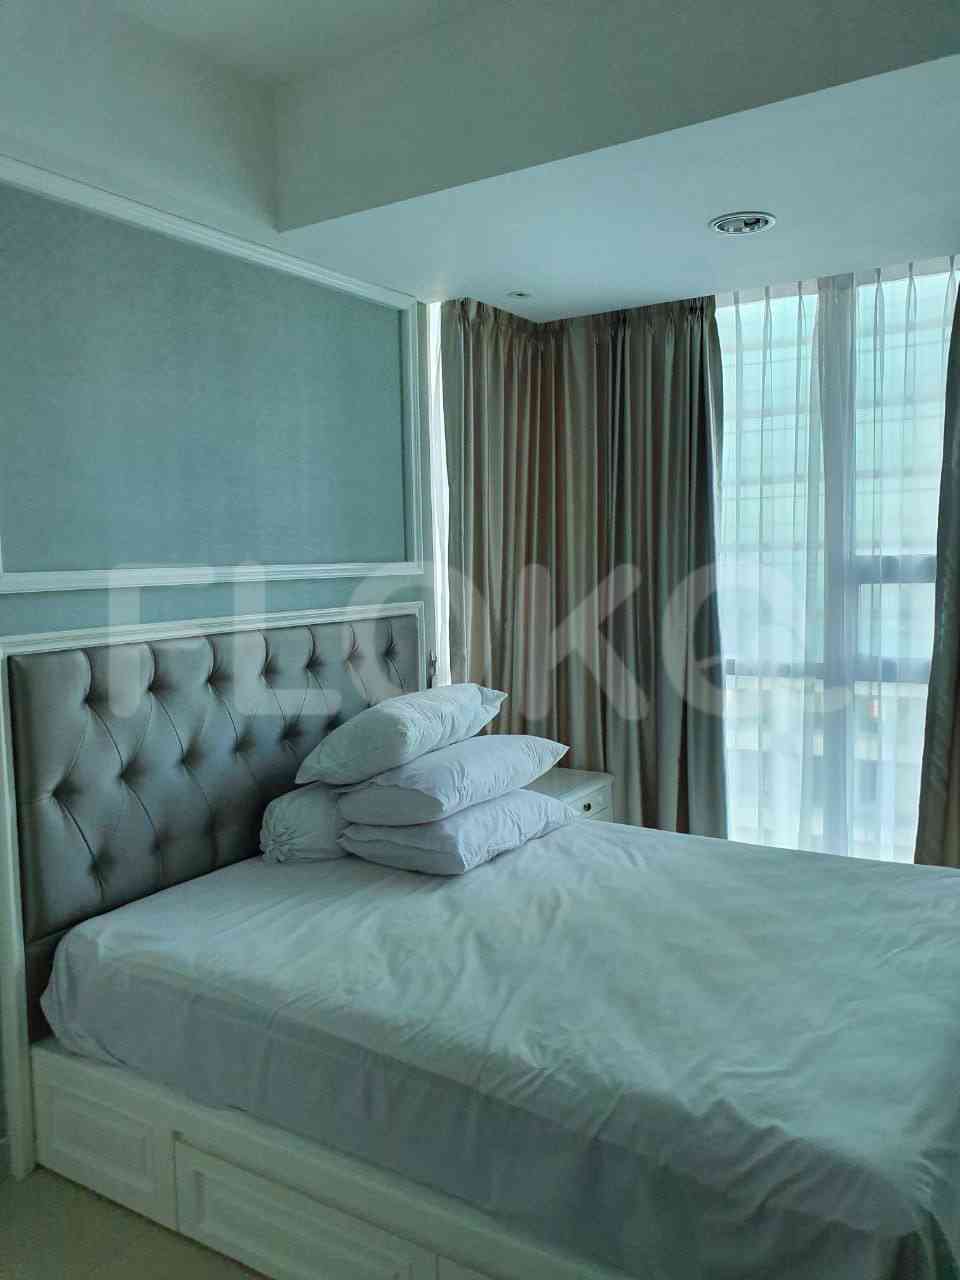 2 Bedroom on 16th Floor for Rent in Kemang Village Residence - fke113 1